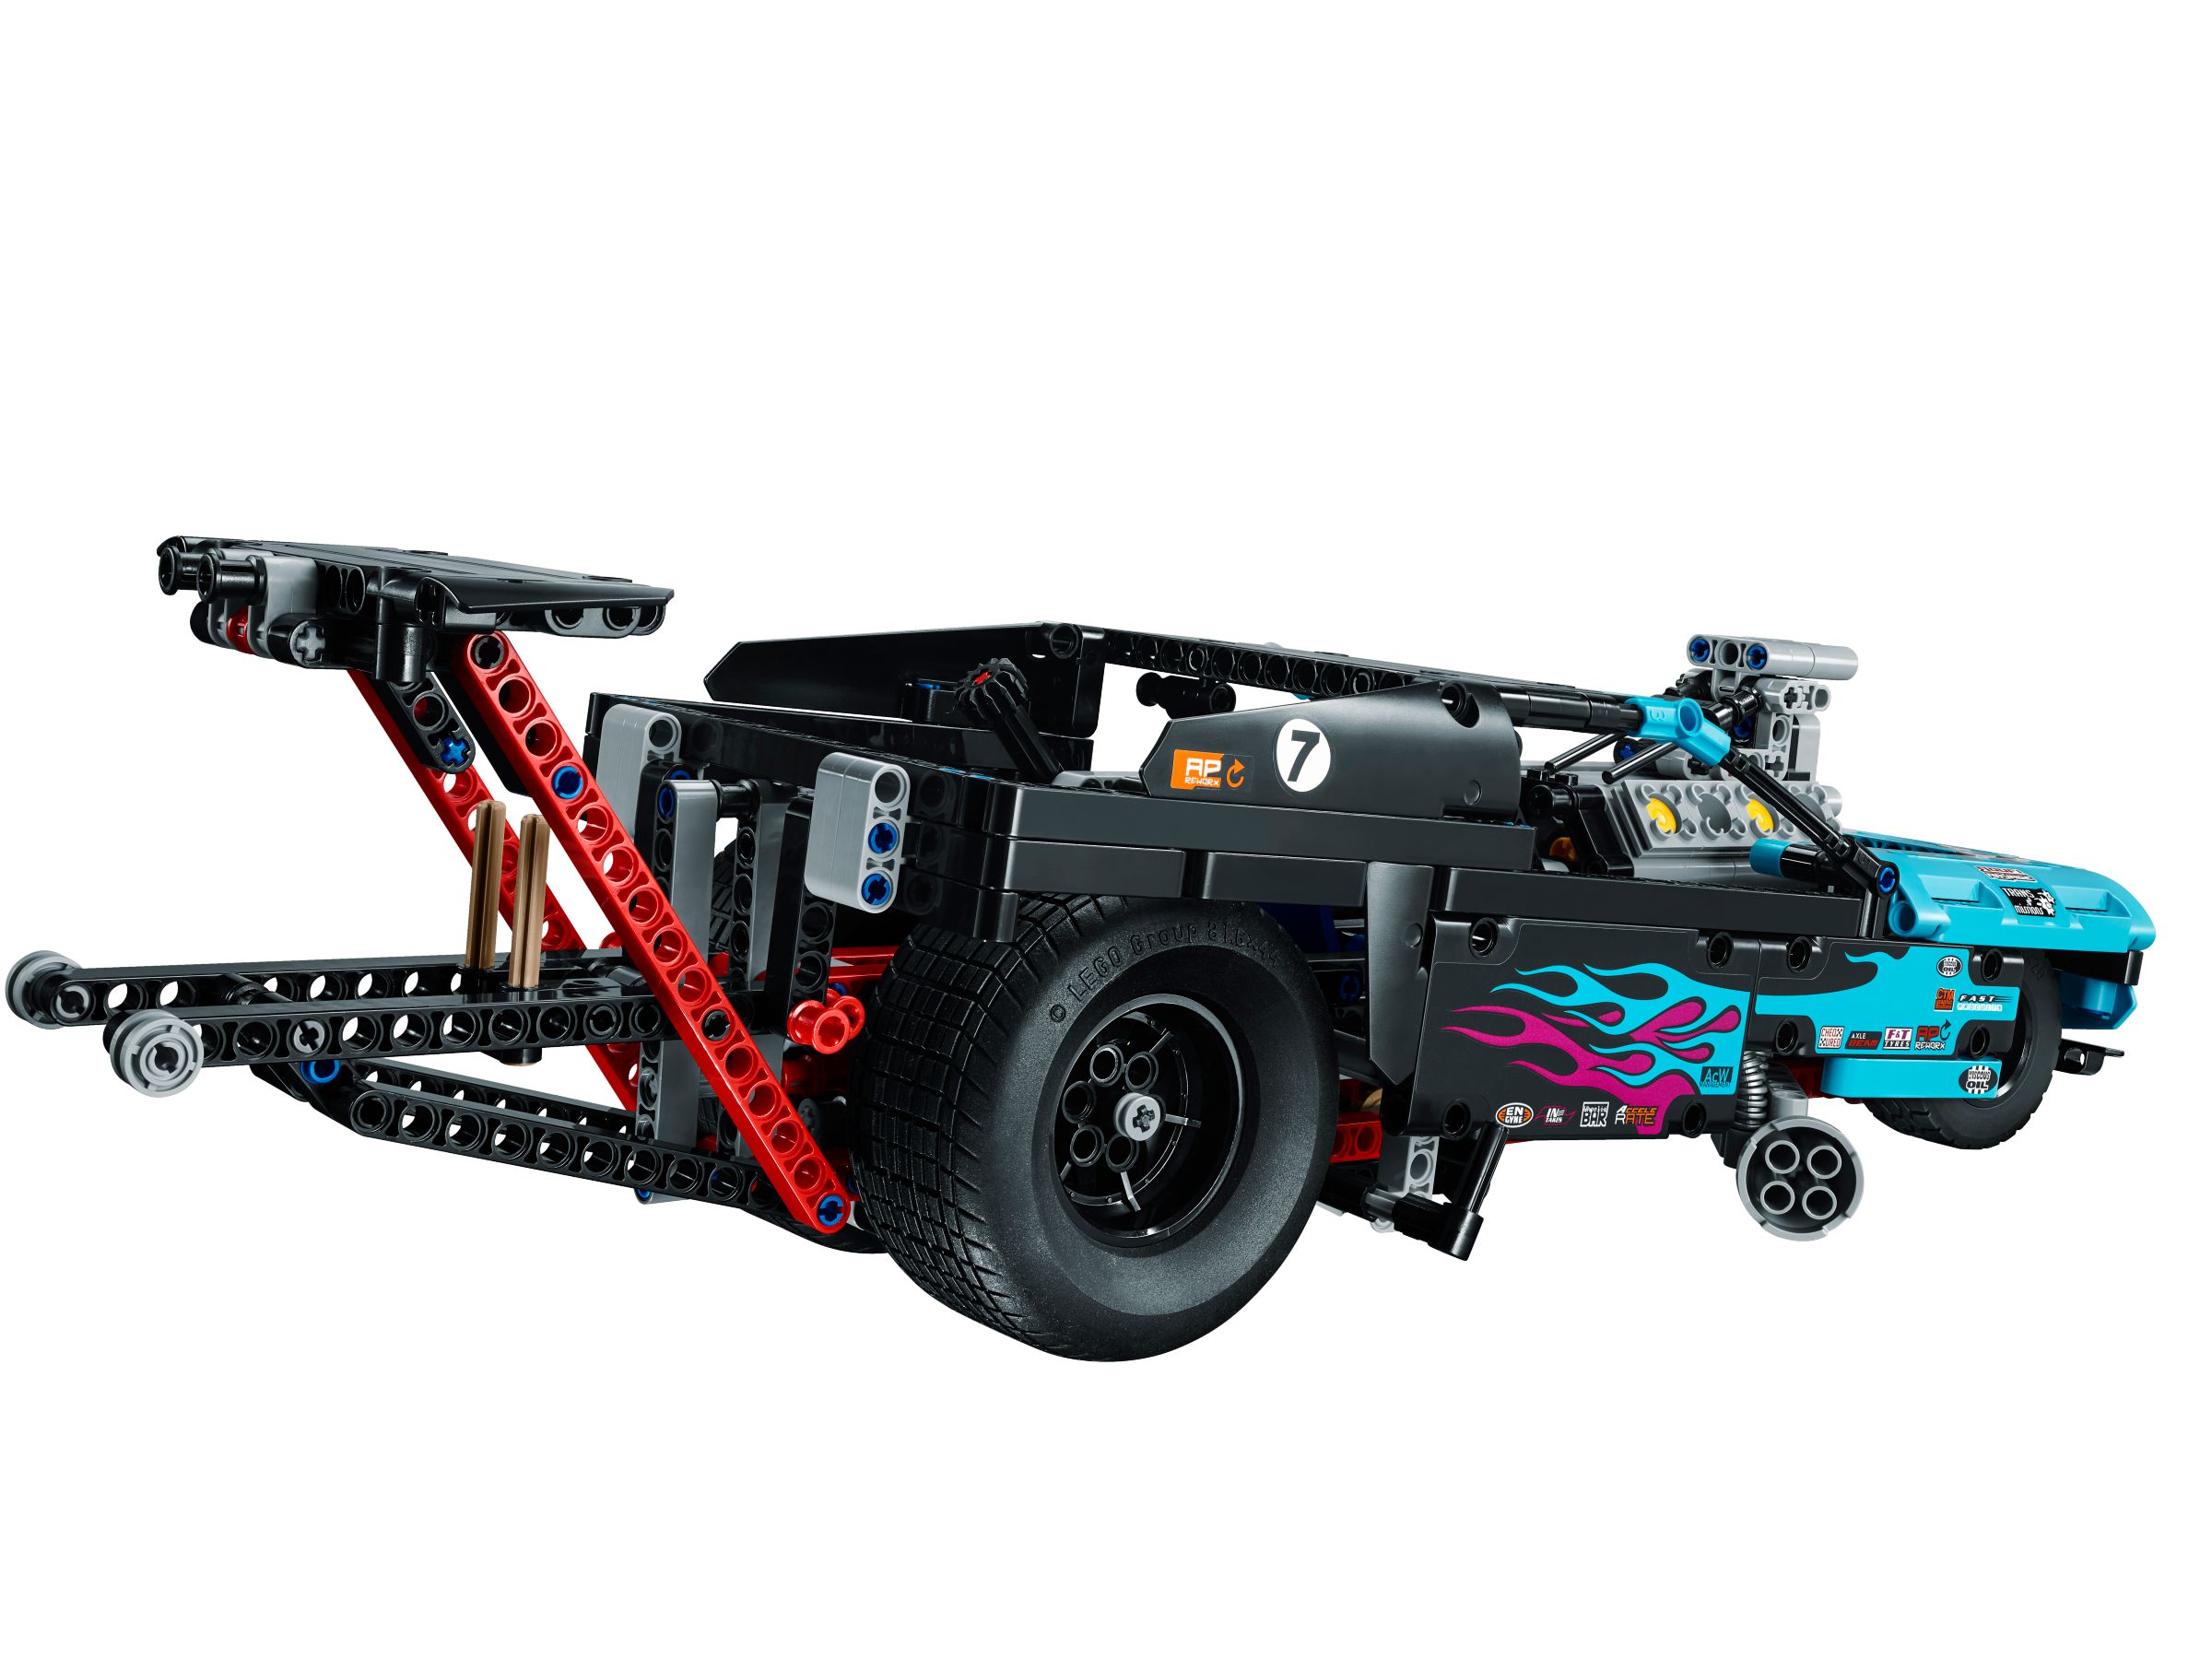 LEGO Technic 42050 Drag Racer LEGO_42050_alt3.jpg